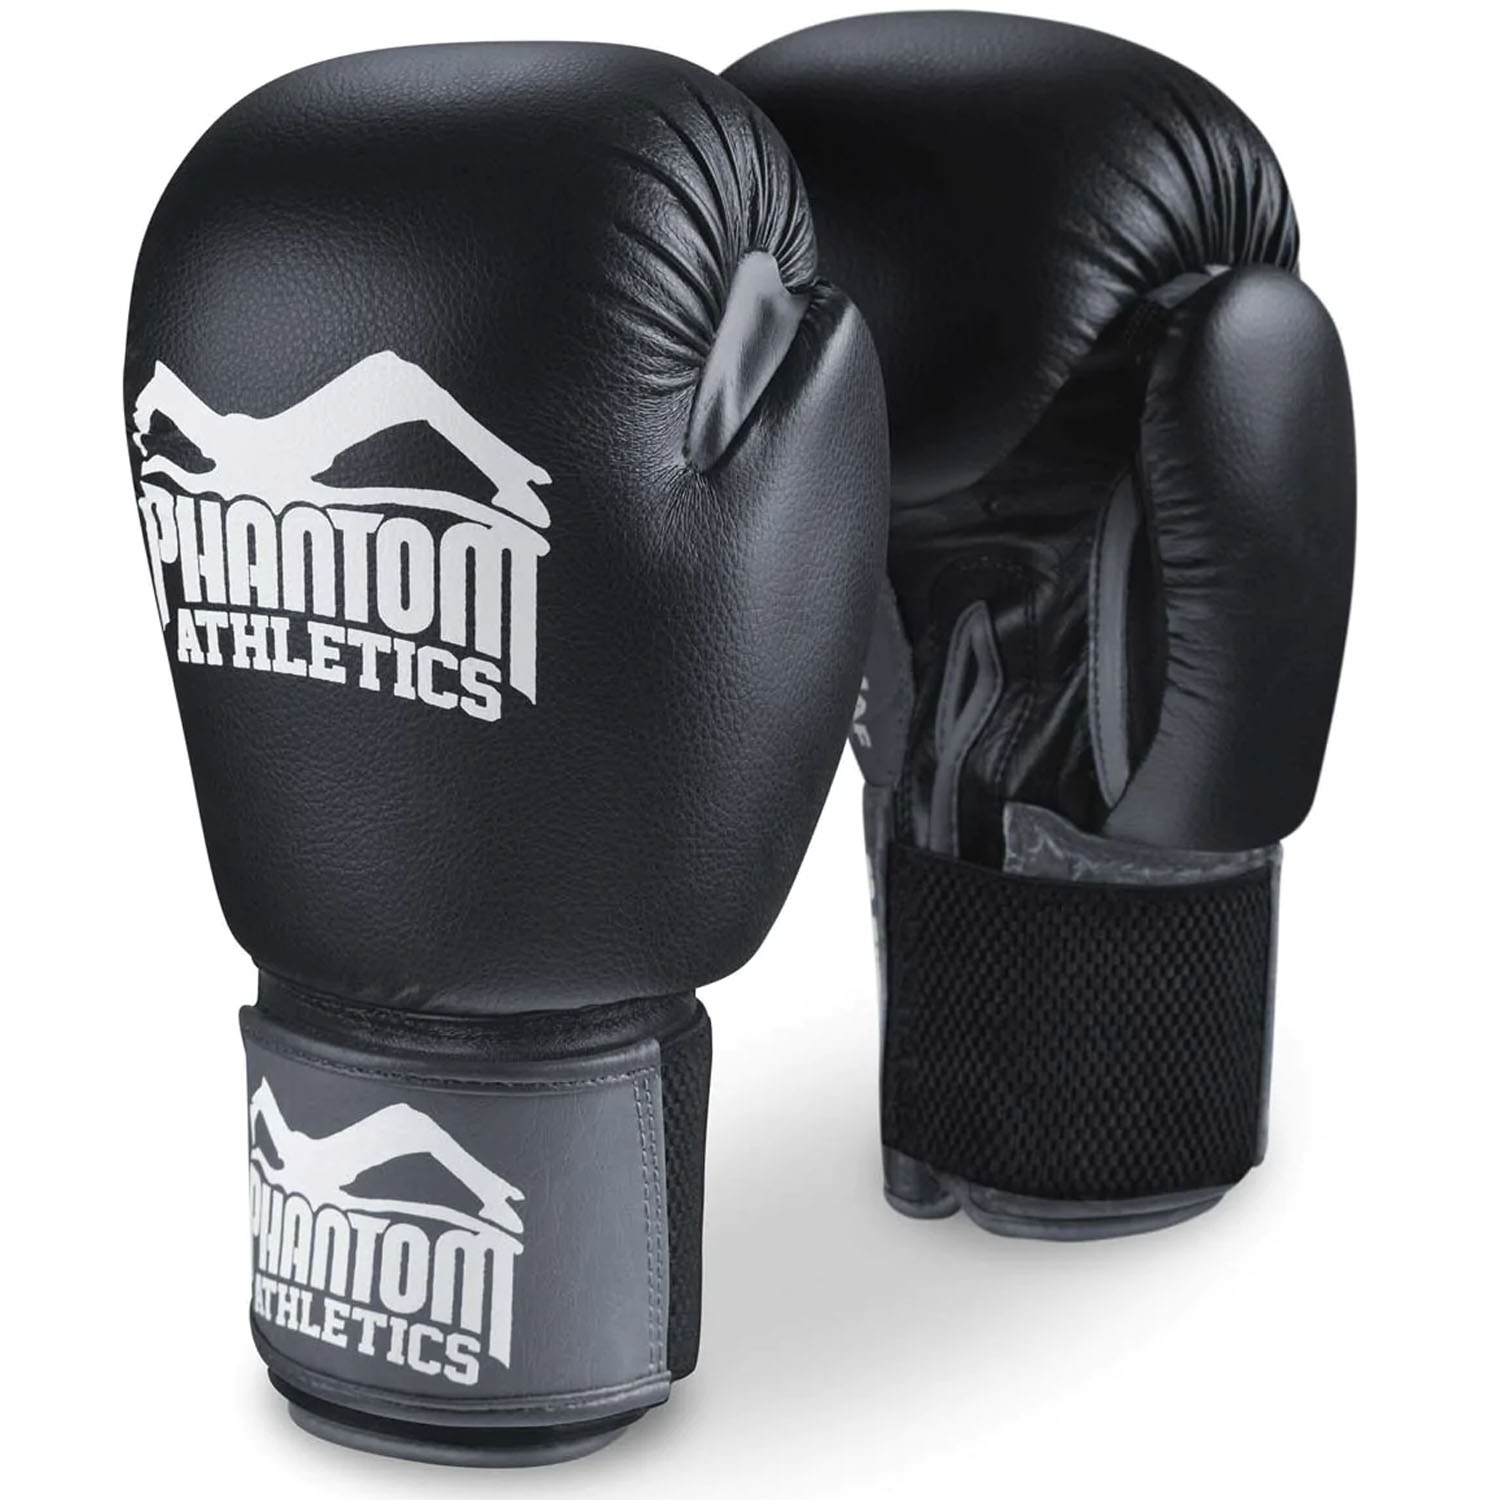 Phantom Athletics Boxing Gloves, Ultra, black, 10 Oz